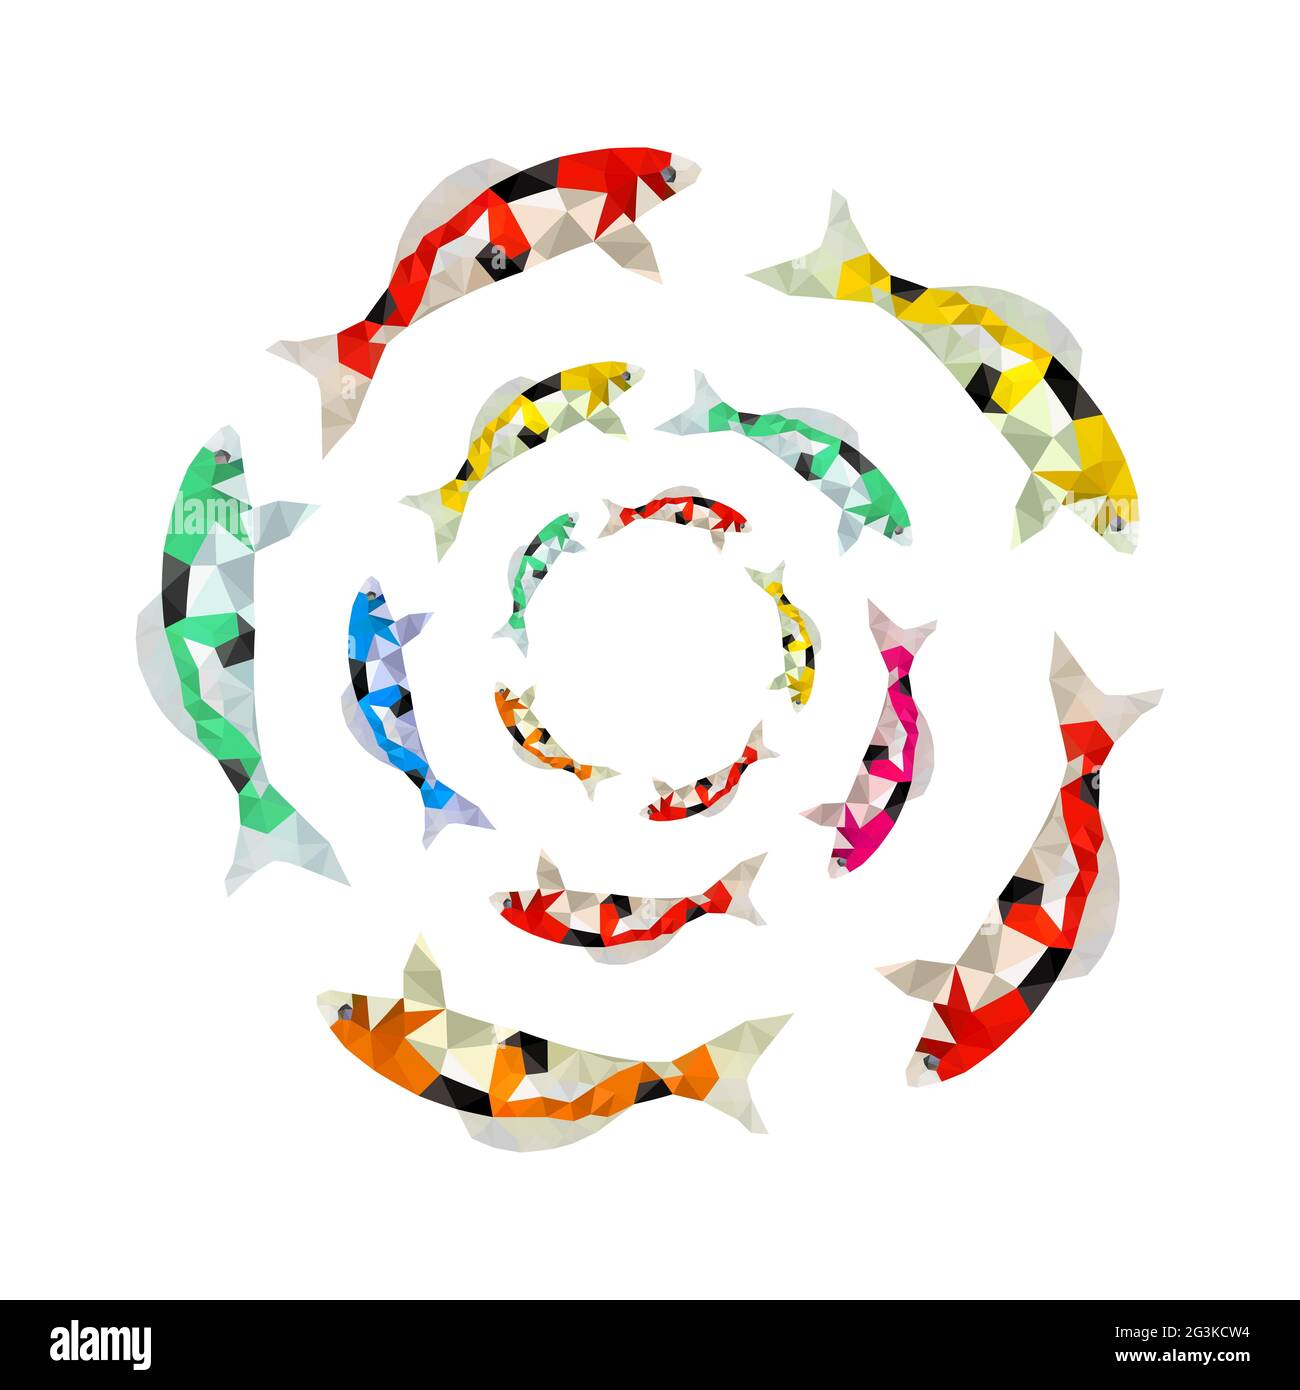 Illustration of colorful origami koi fish swimming in circle Stock Photo